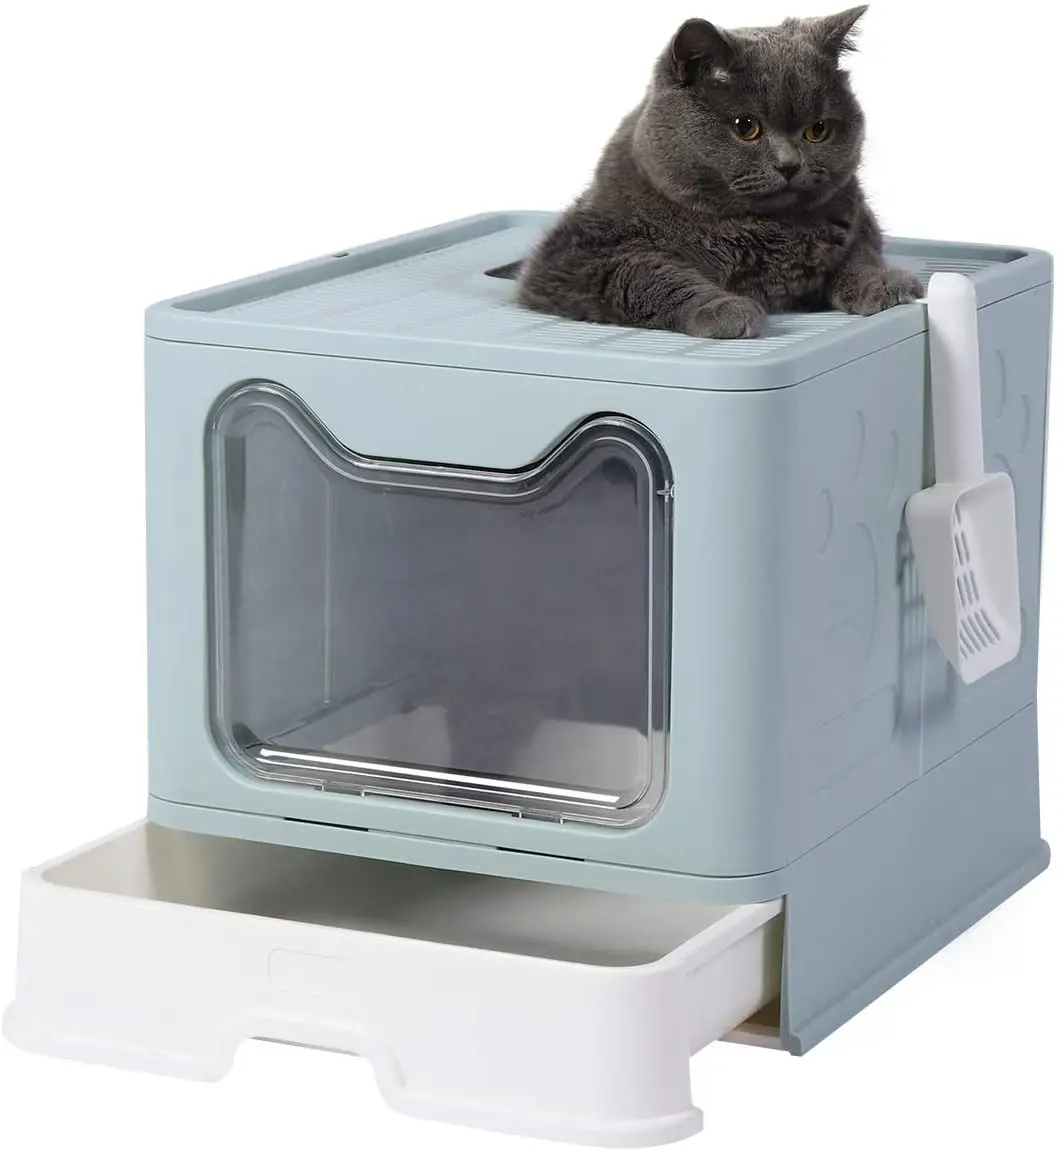 

Cat Litter Box Portable Ttoilet With Lid Top Entry Type Anti-Splashing closed Cat Litter Box, Blue,pink,grey